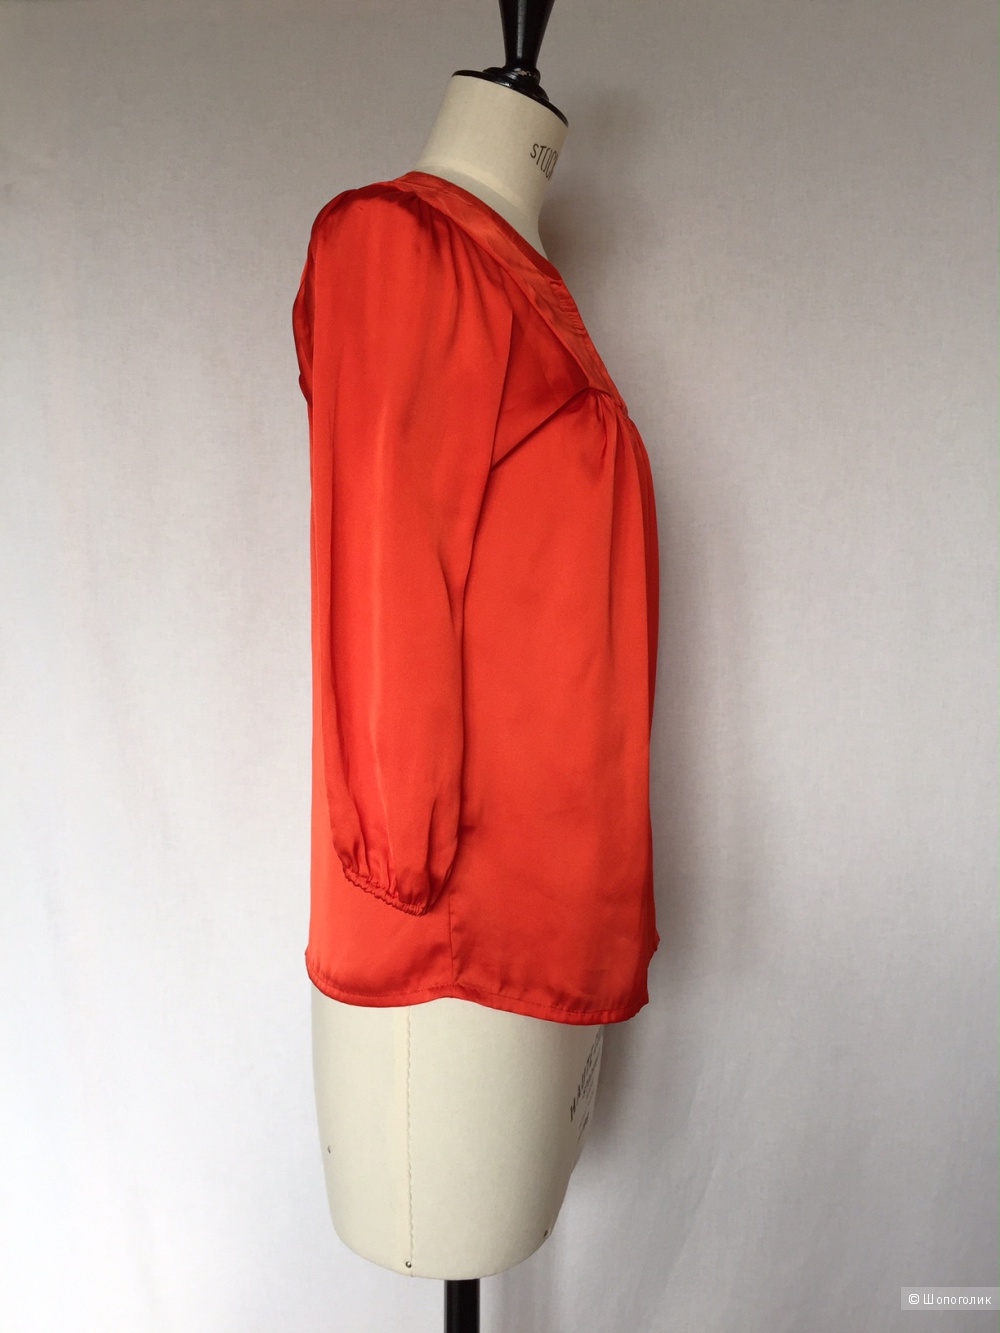 Блузка интересного кроя  ярко- оранжевого цвета от марки H&M размер 40-42